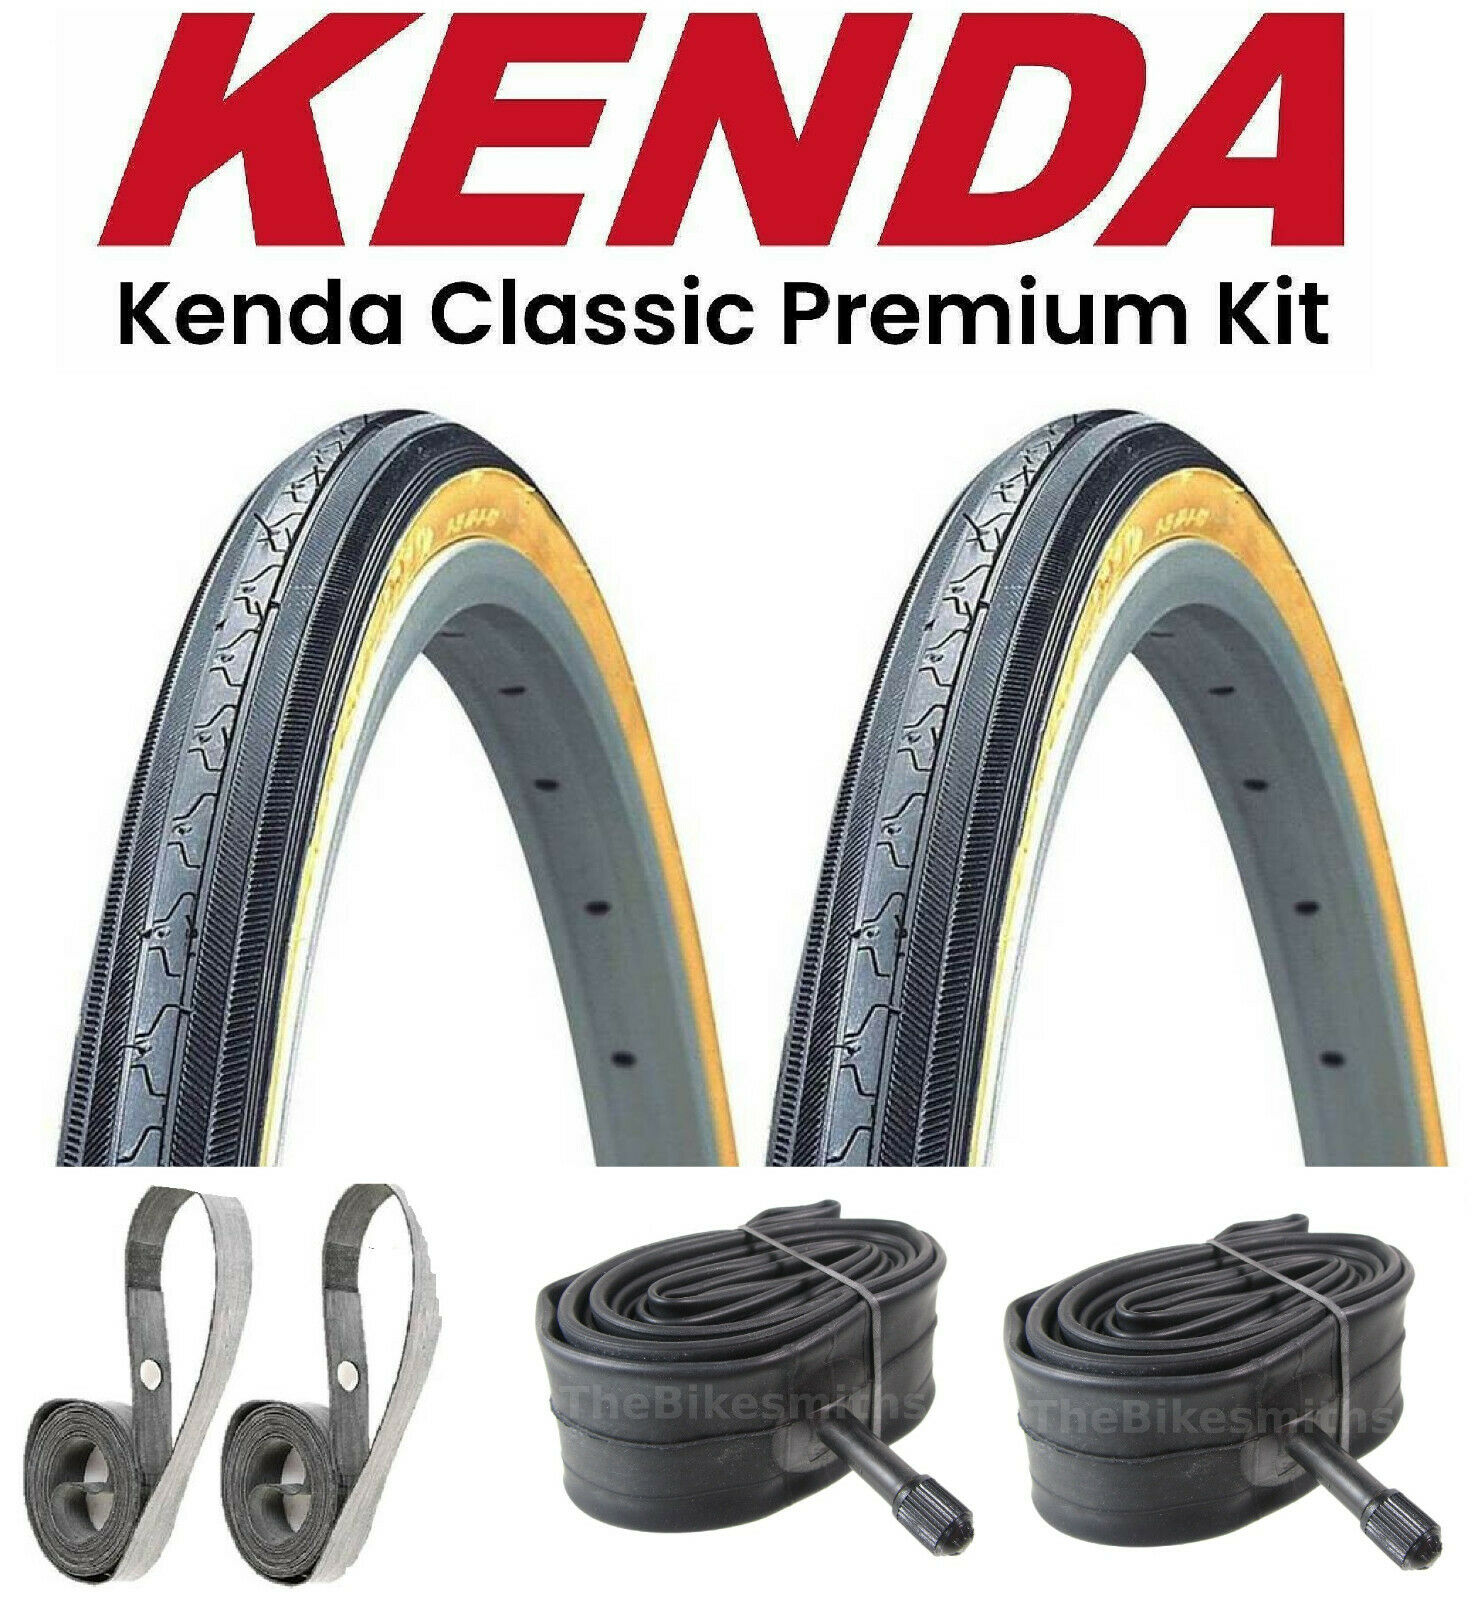 Kenda K35 Classic Gumwall Kit Retro 27" X 1-1/4" Bike Tires + Tubes + Rim Strips